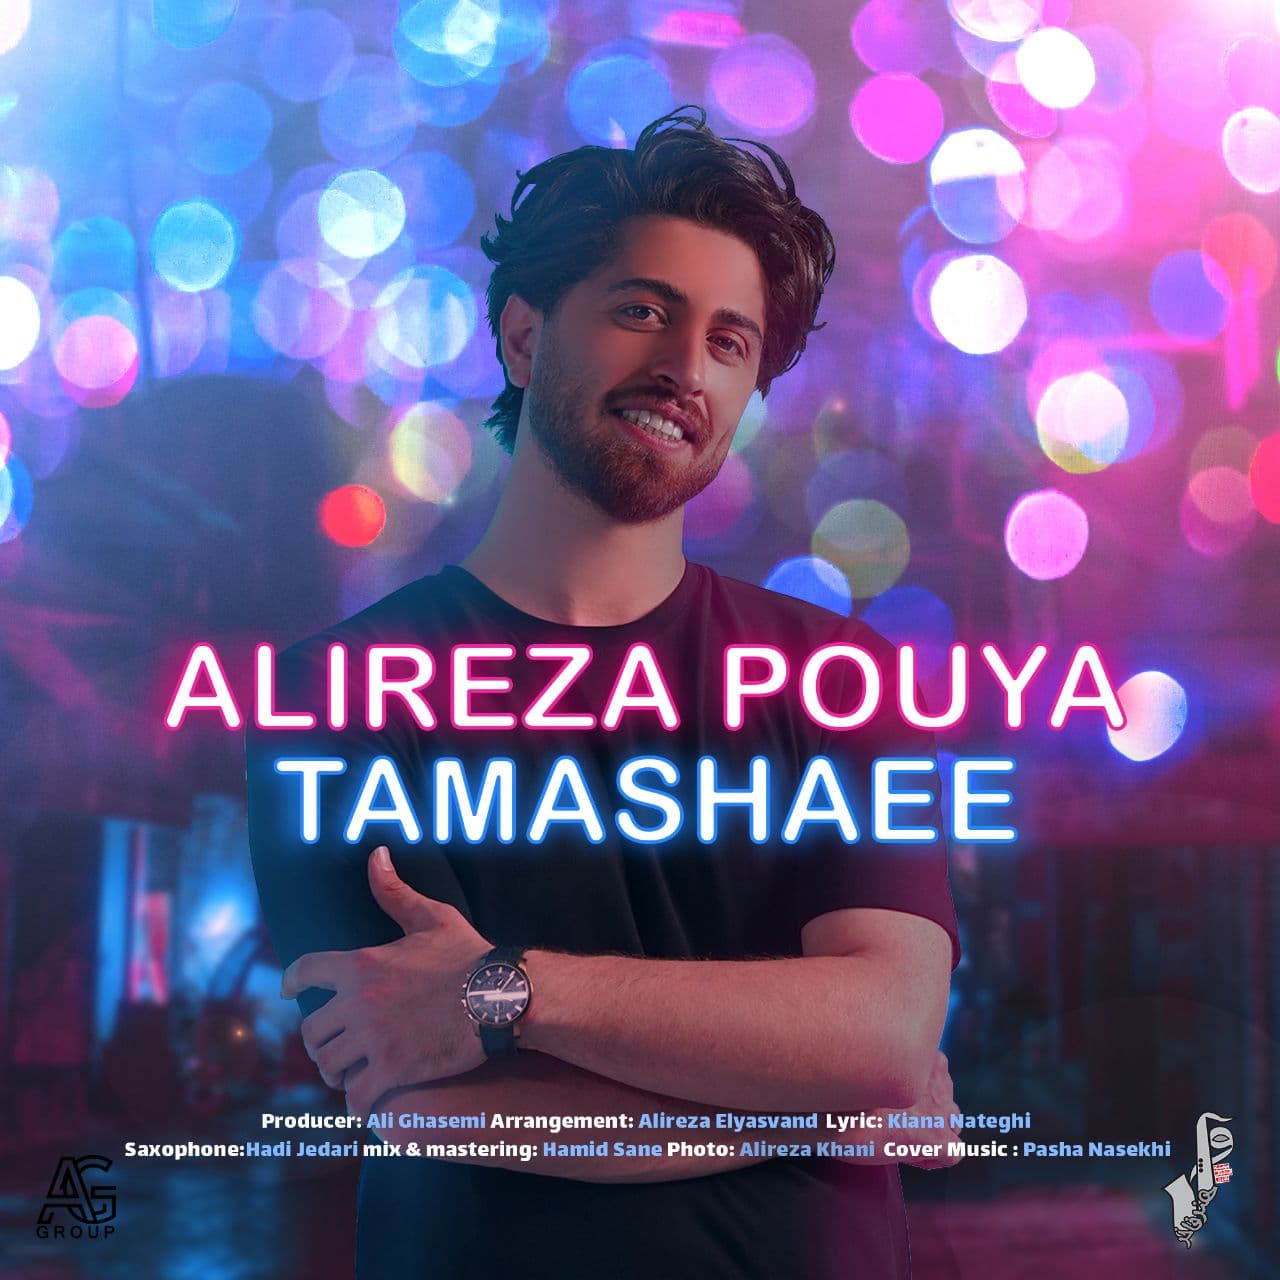  دانلود آهنگ جدید علیرضا پویا - تماشایی | Download New Music By Alireza Pouya -  Tamashaee